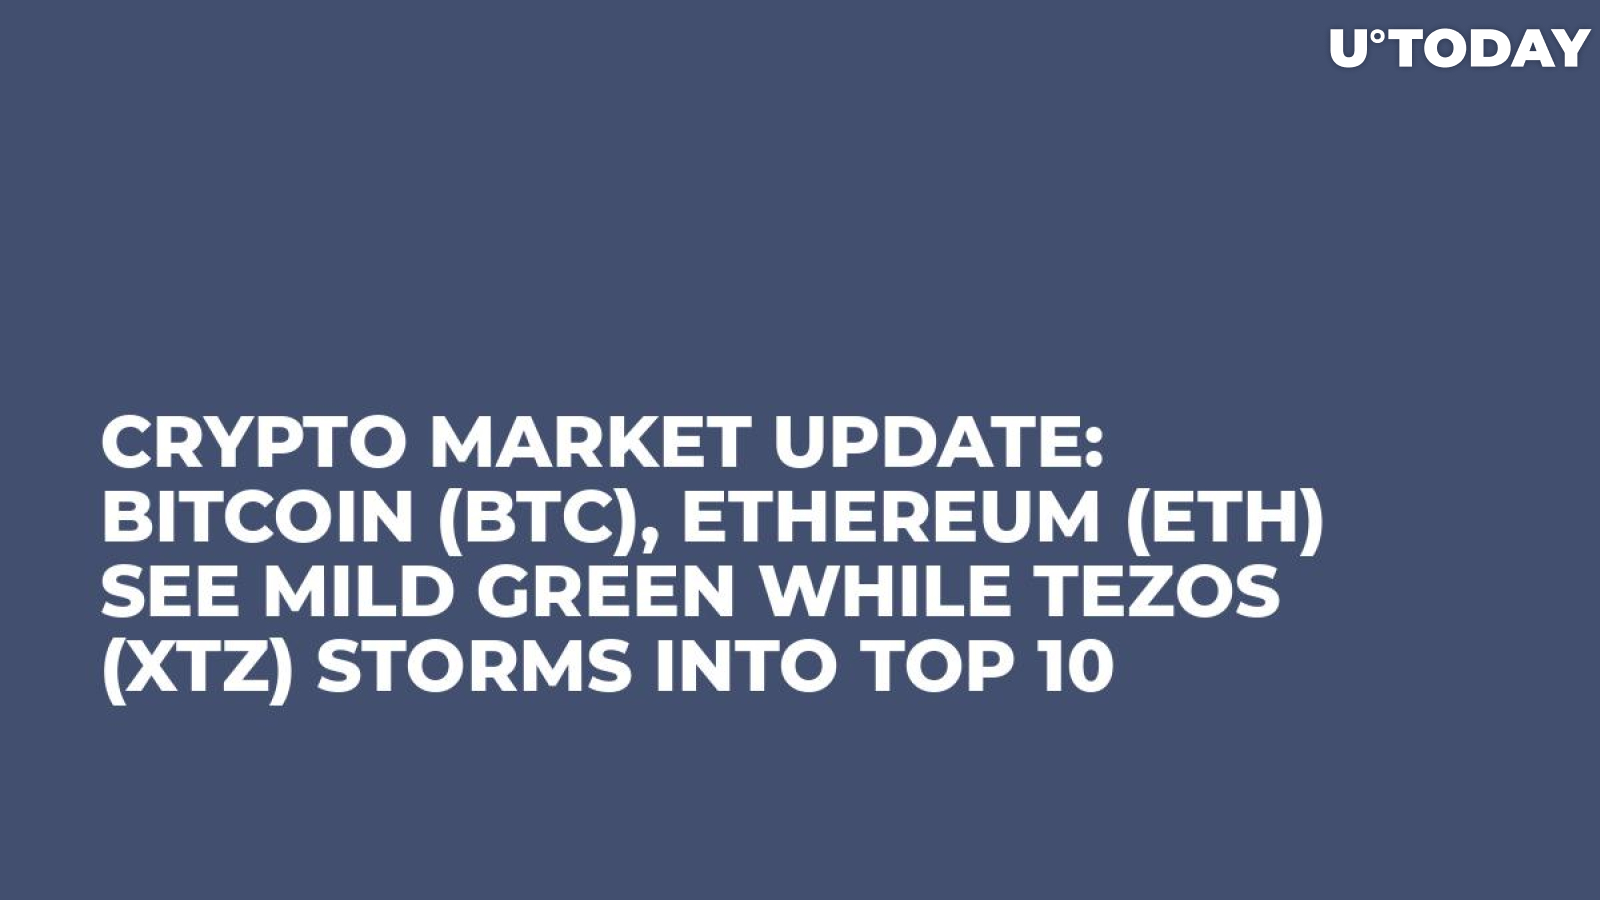 Crypto Market Update: Bitcoin (BTC), Ethereum (ETH) See Mild Green While Tezos (XTZ) Storms into Top 10